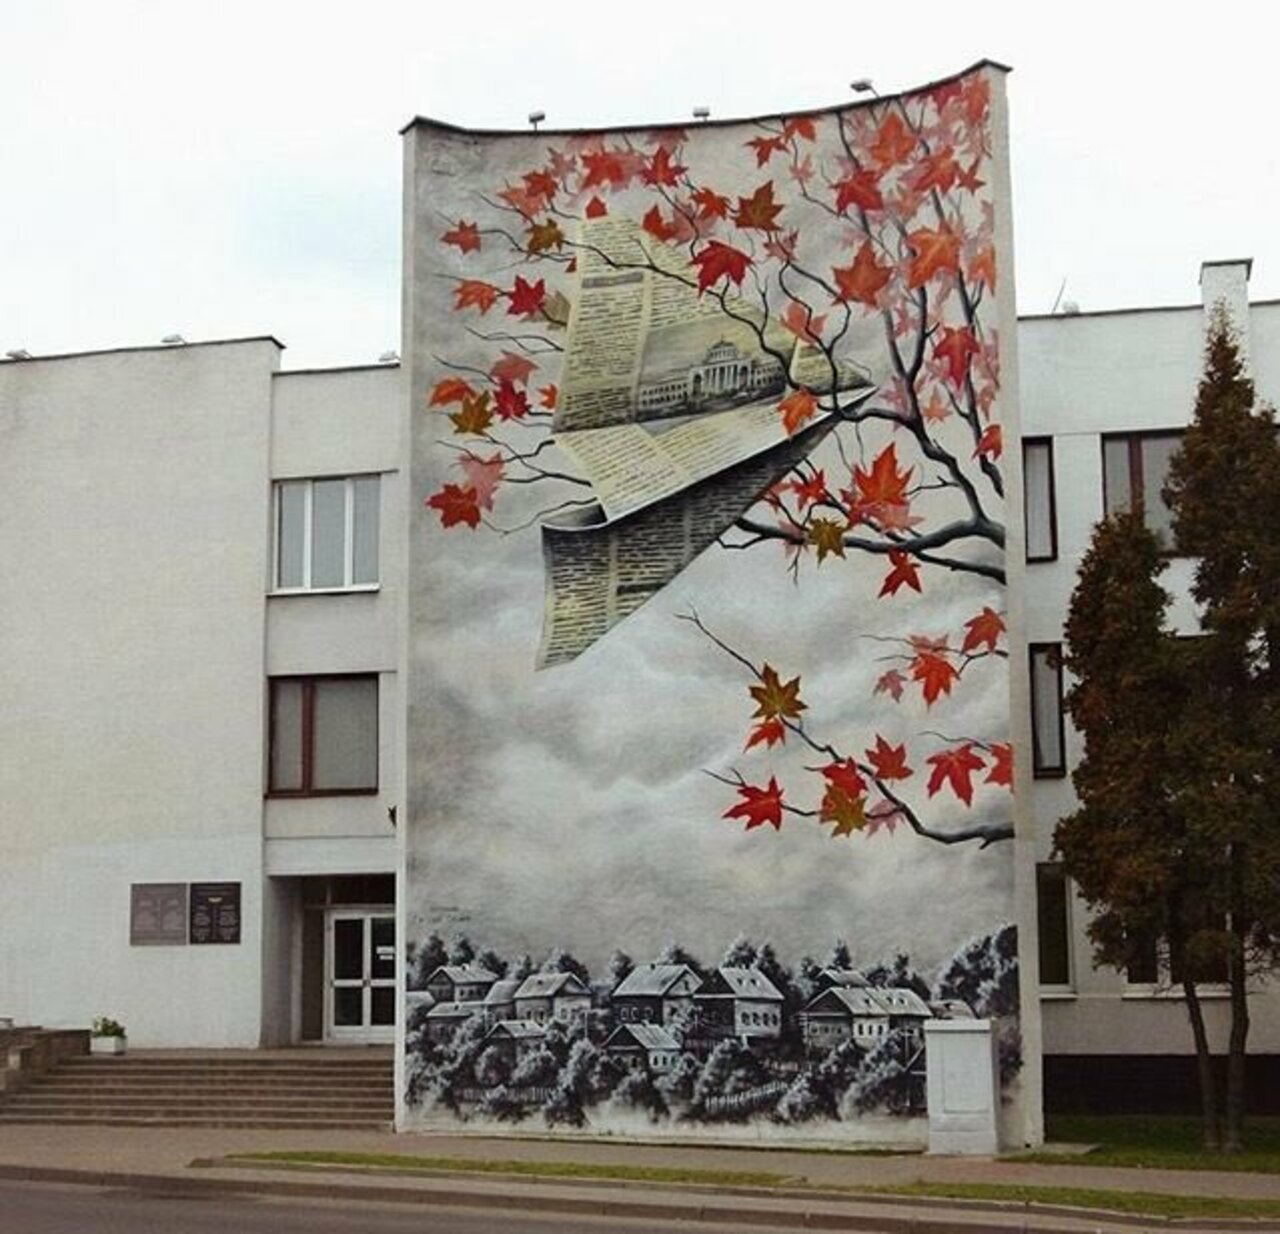 RT belilac "New Street Art by MUTUS in Belarus 

#art #graffiti #mural #streetart https://t.co/AGsyIY8nAV"